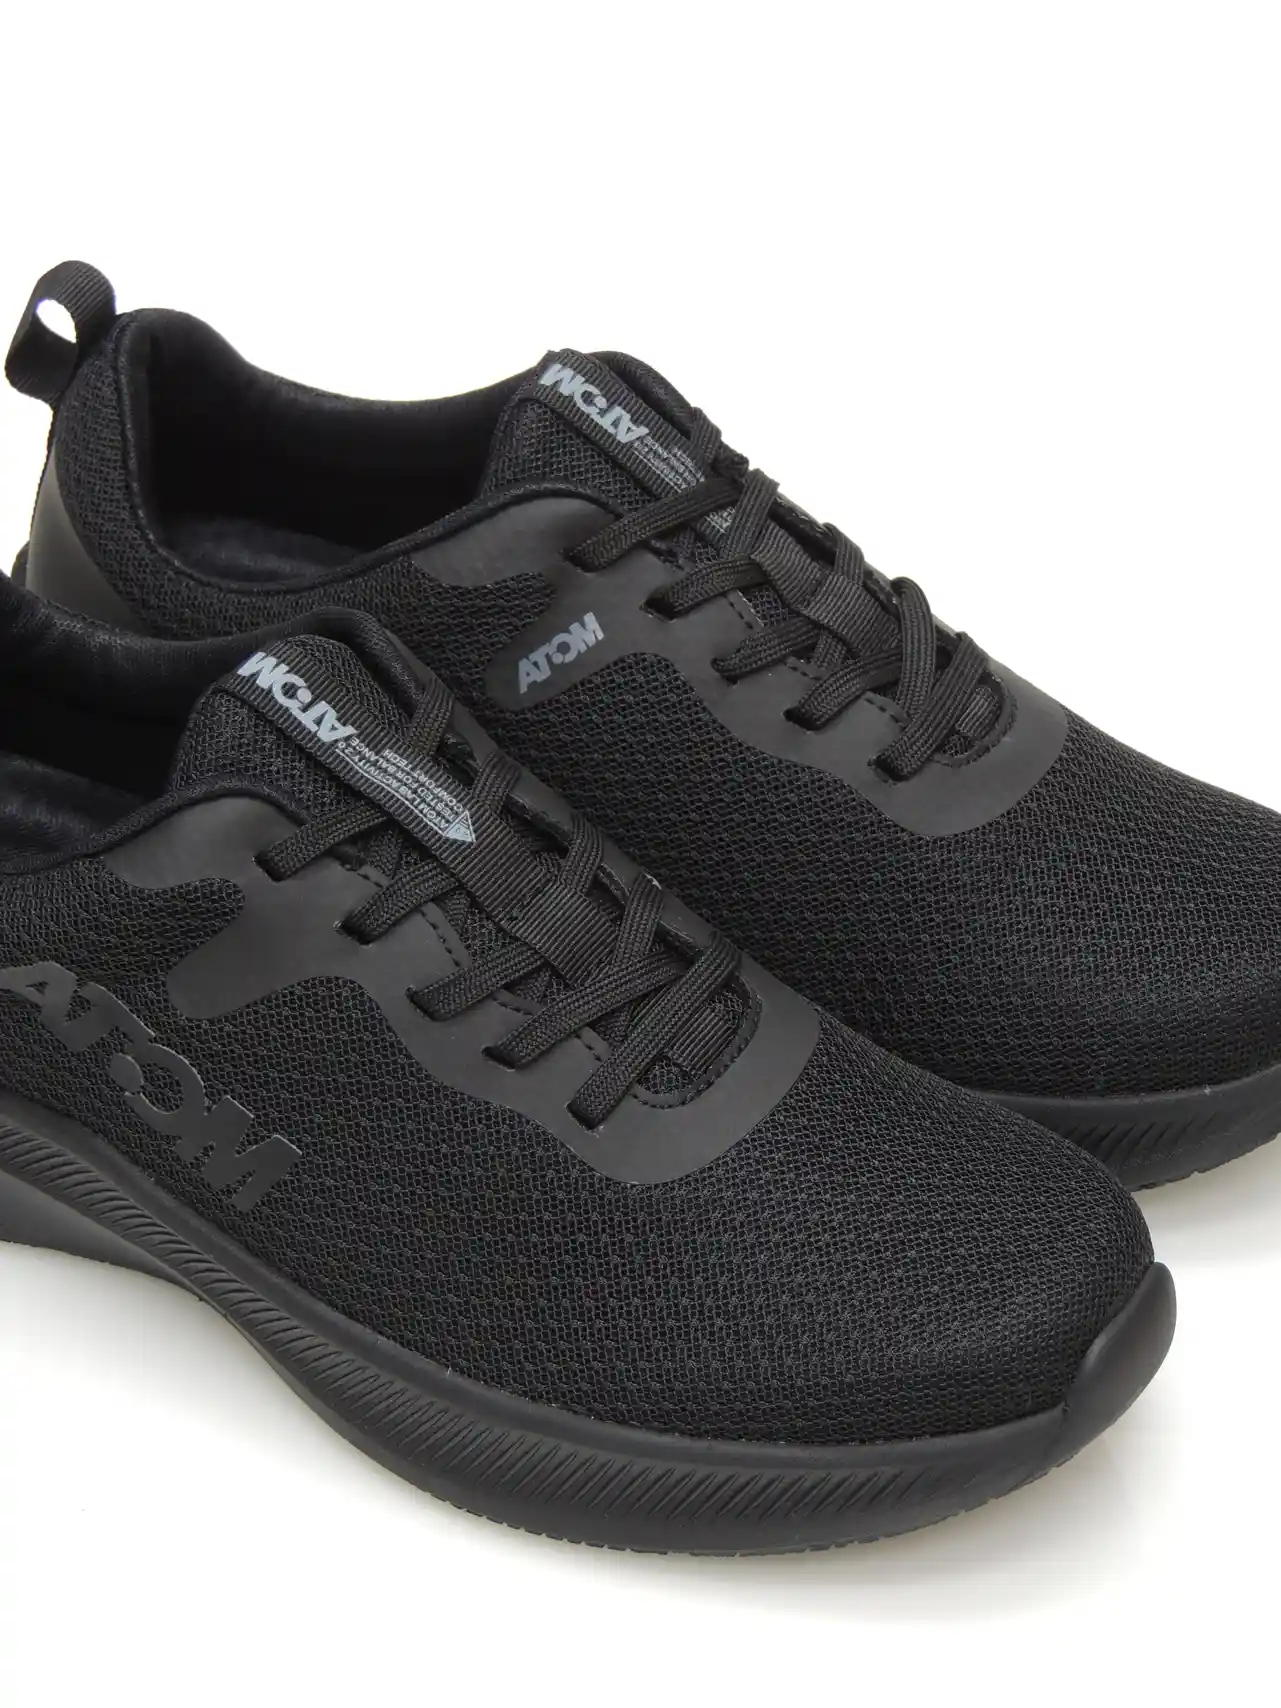 sneakers--fluchos-at126-textil-negro